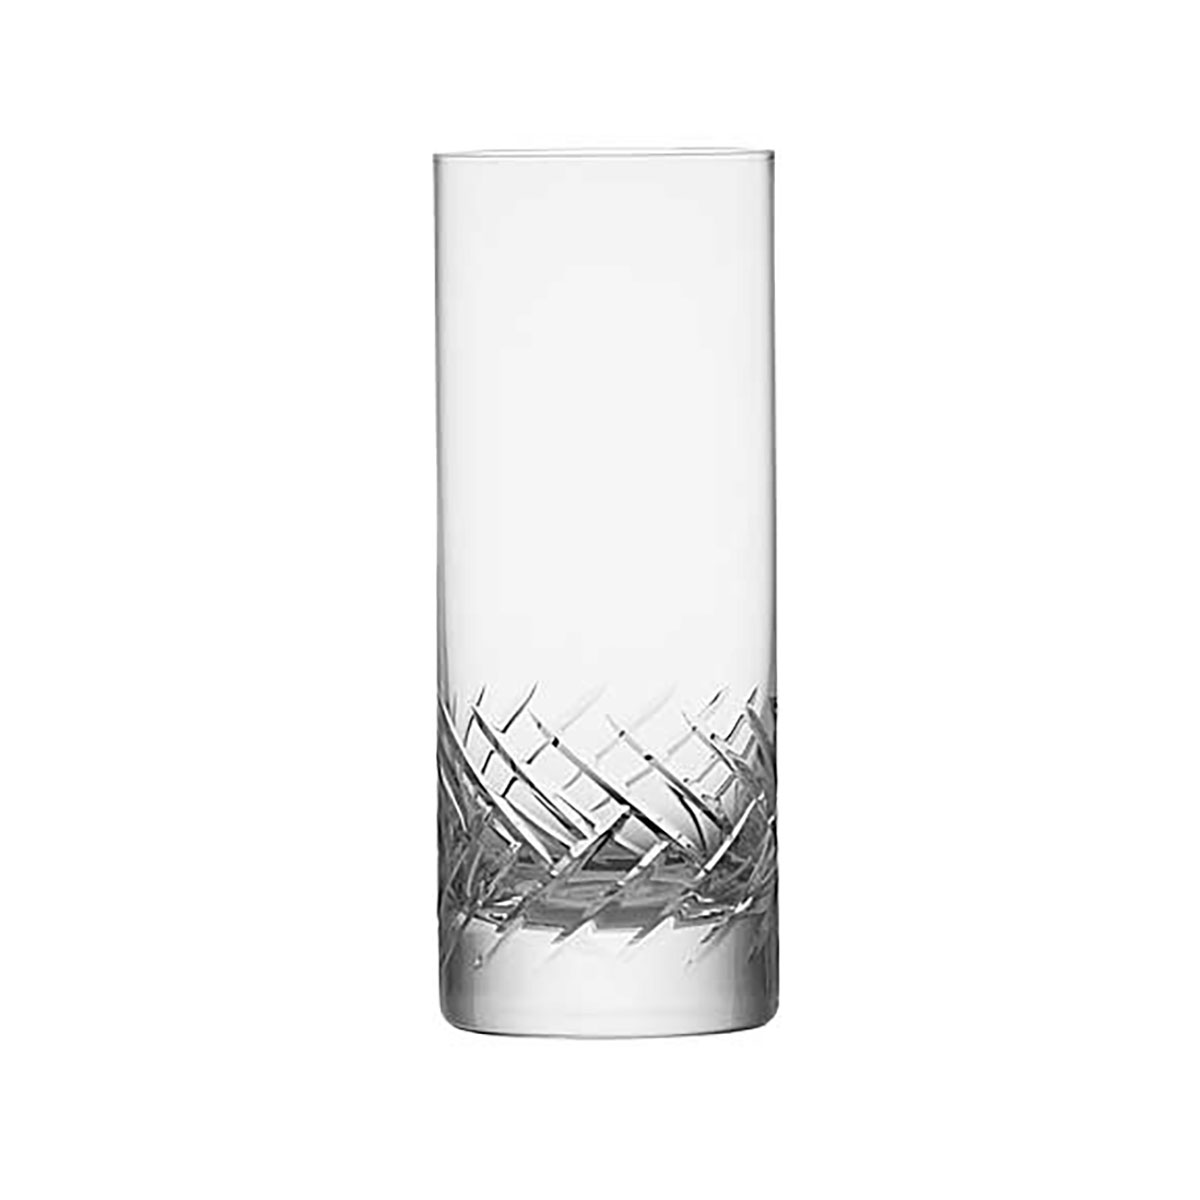 Schott Zwiesel Tritan Crystal, Distil Arran Collins Glass, Pair